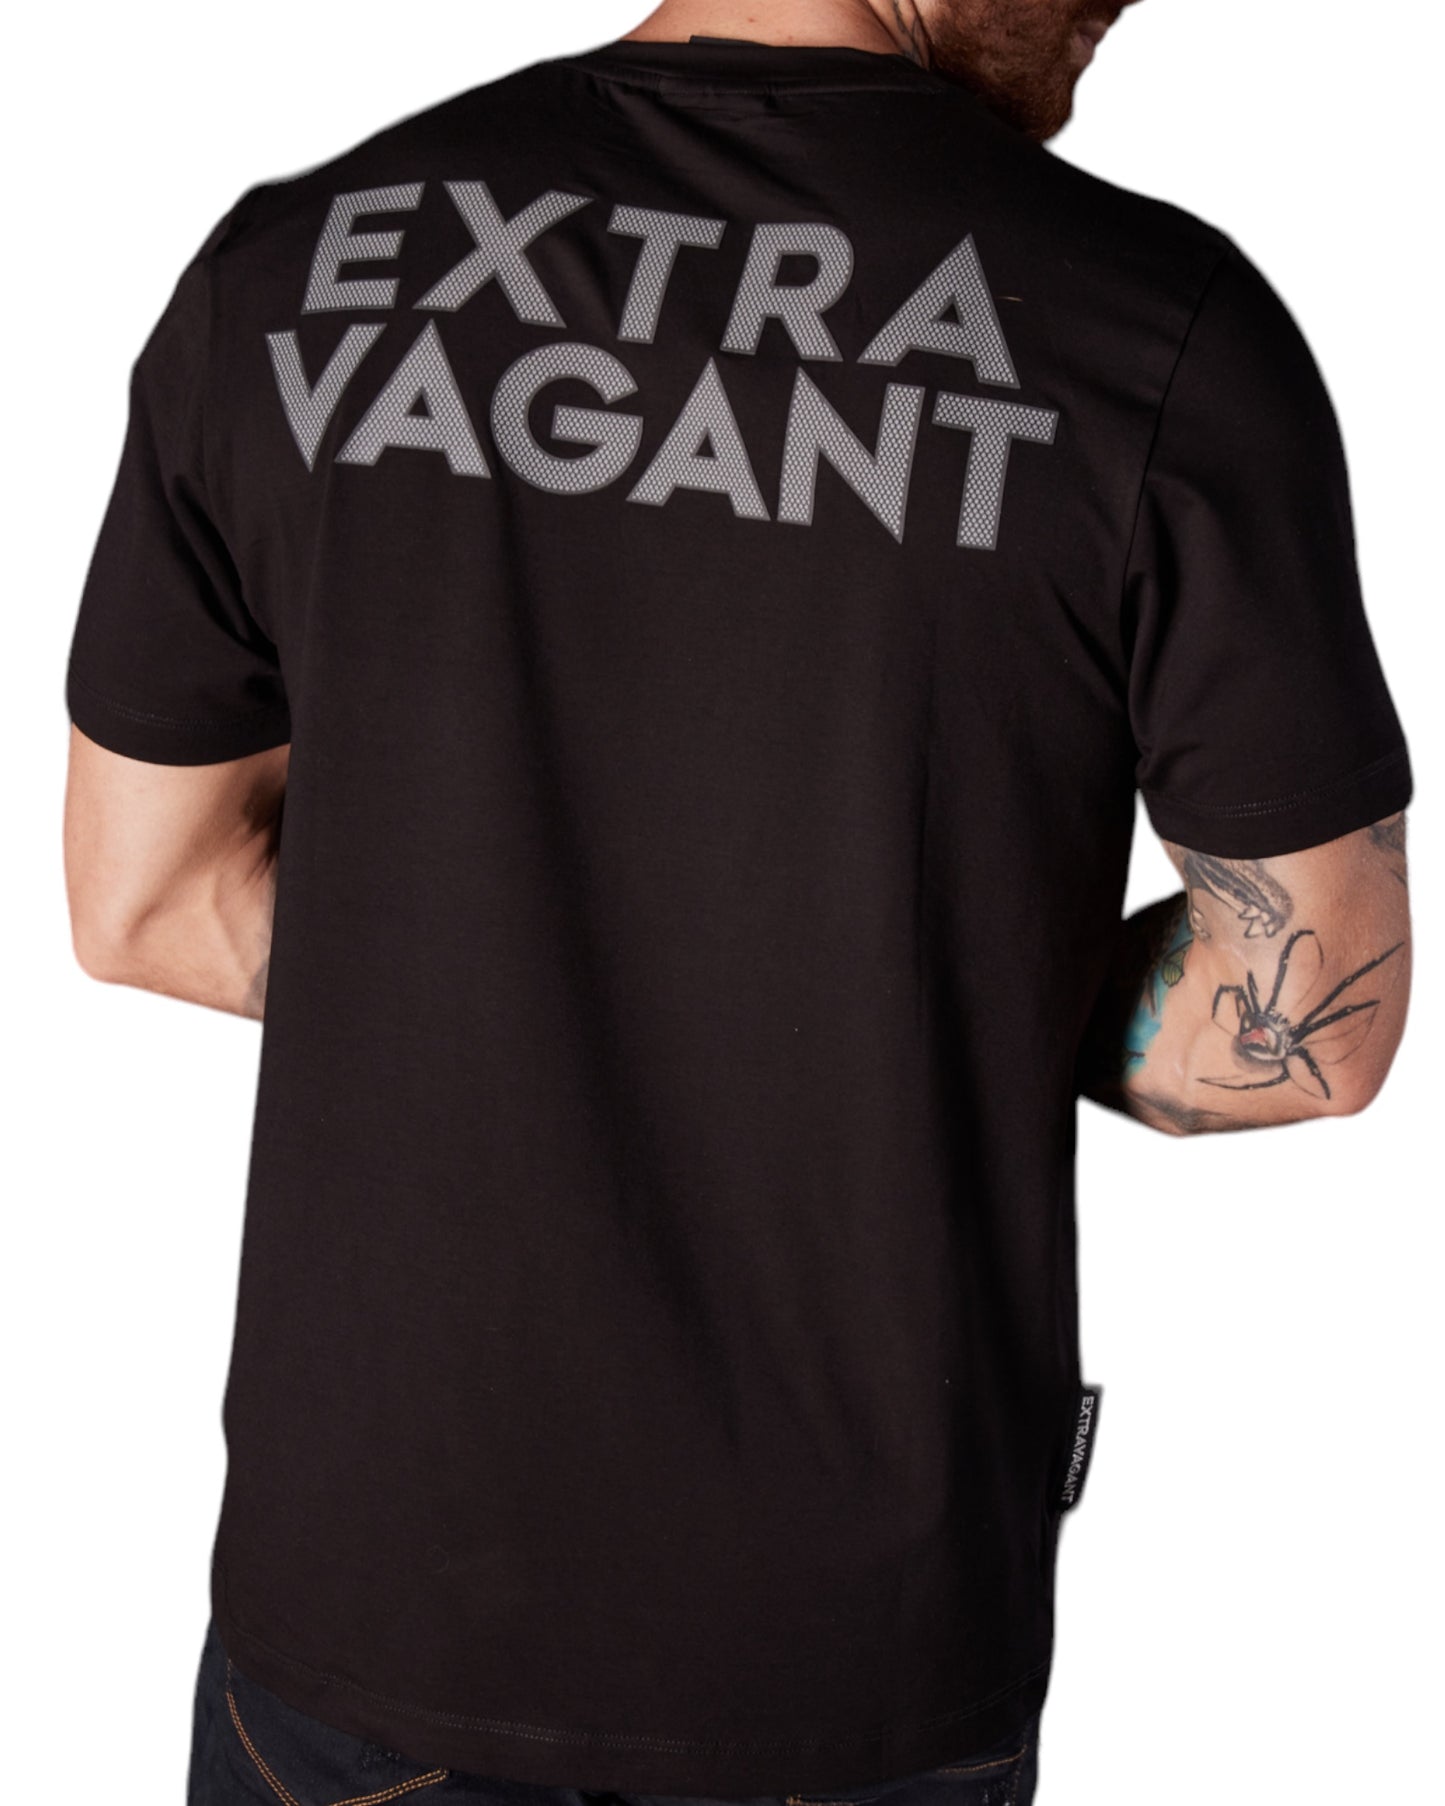 Camiseta BK21 Extra Vagant